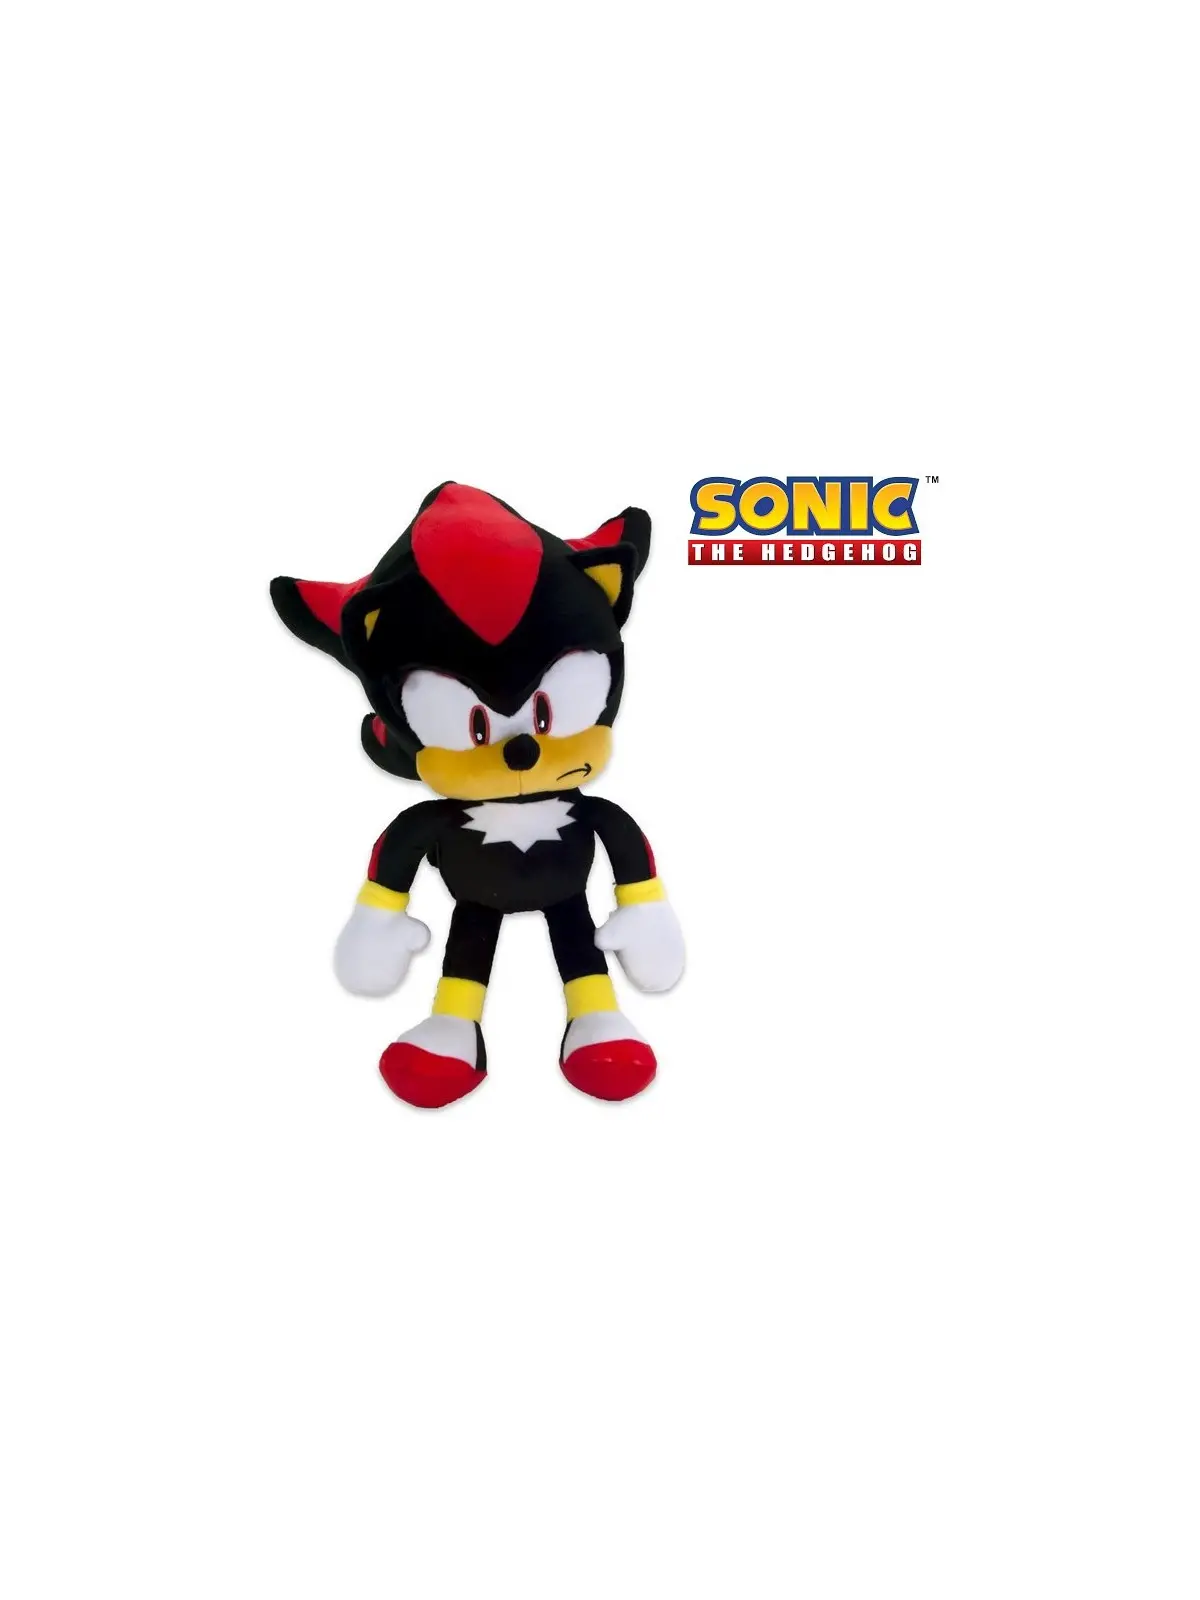 Peluche Sonic The Hedgehog Shadow 30 cm